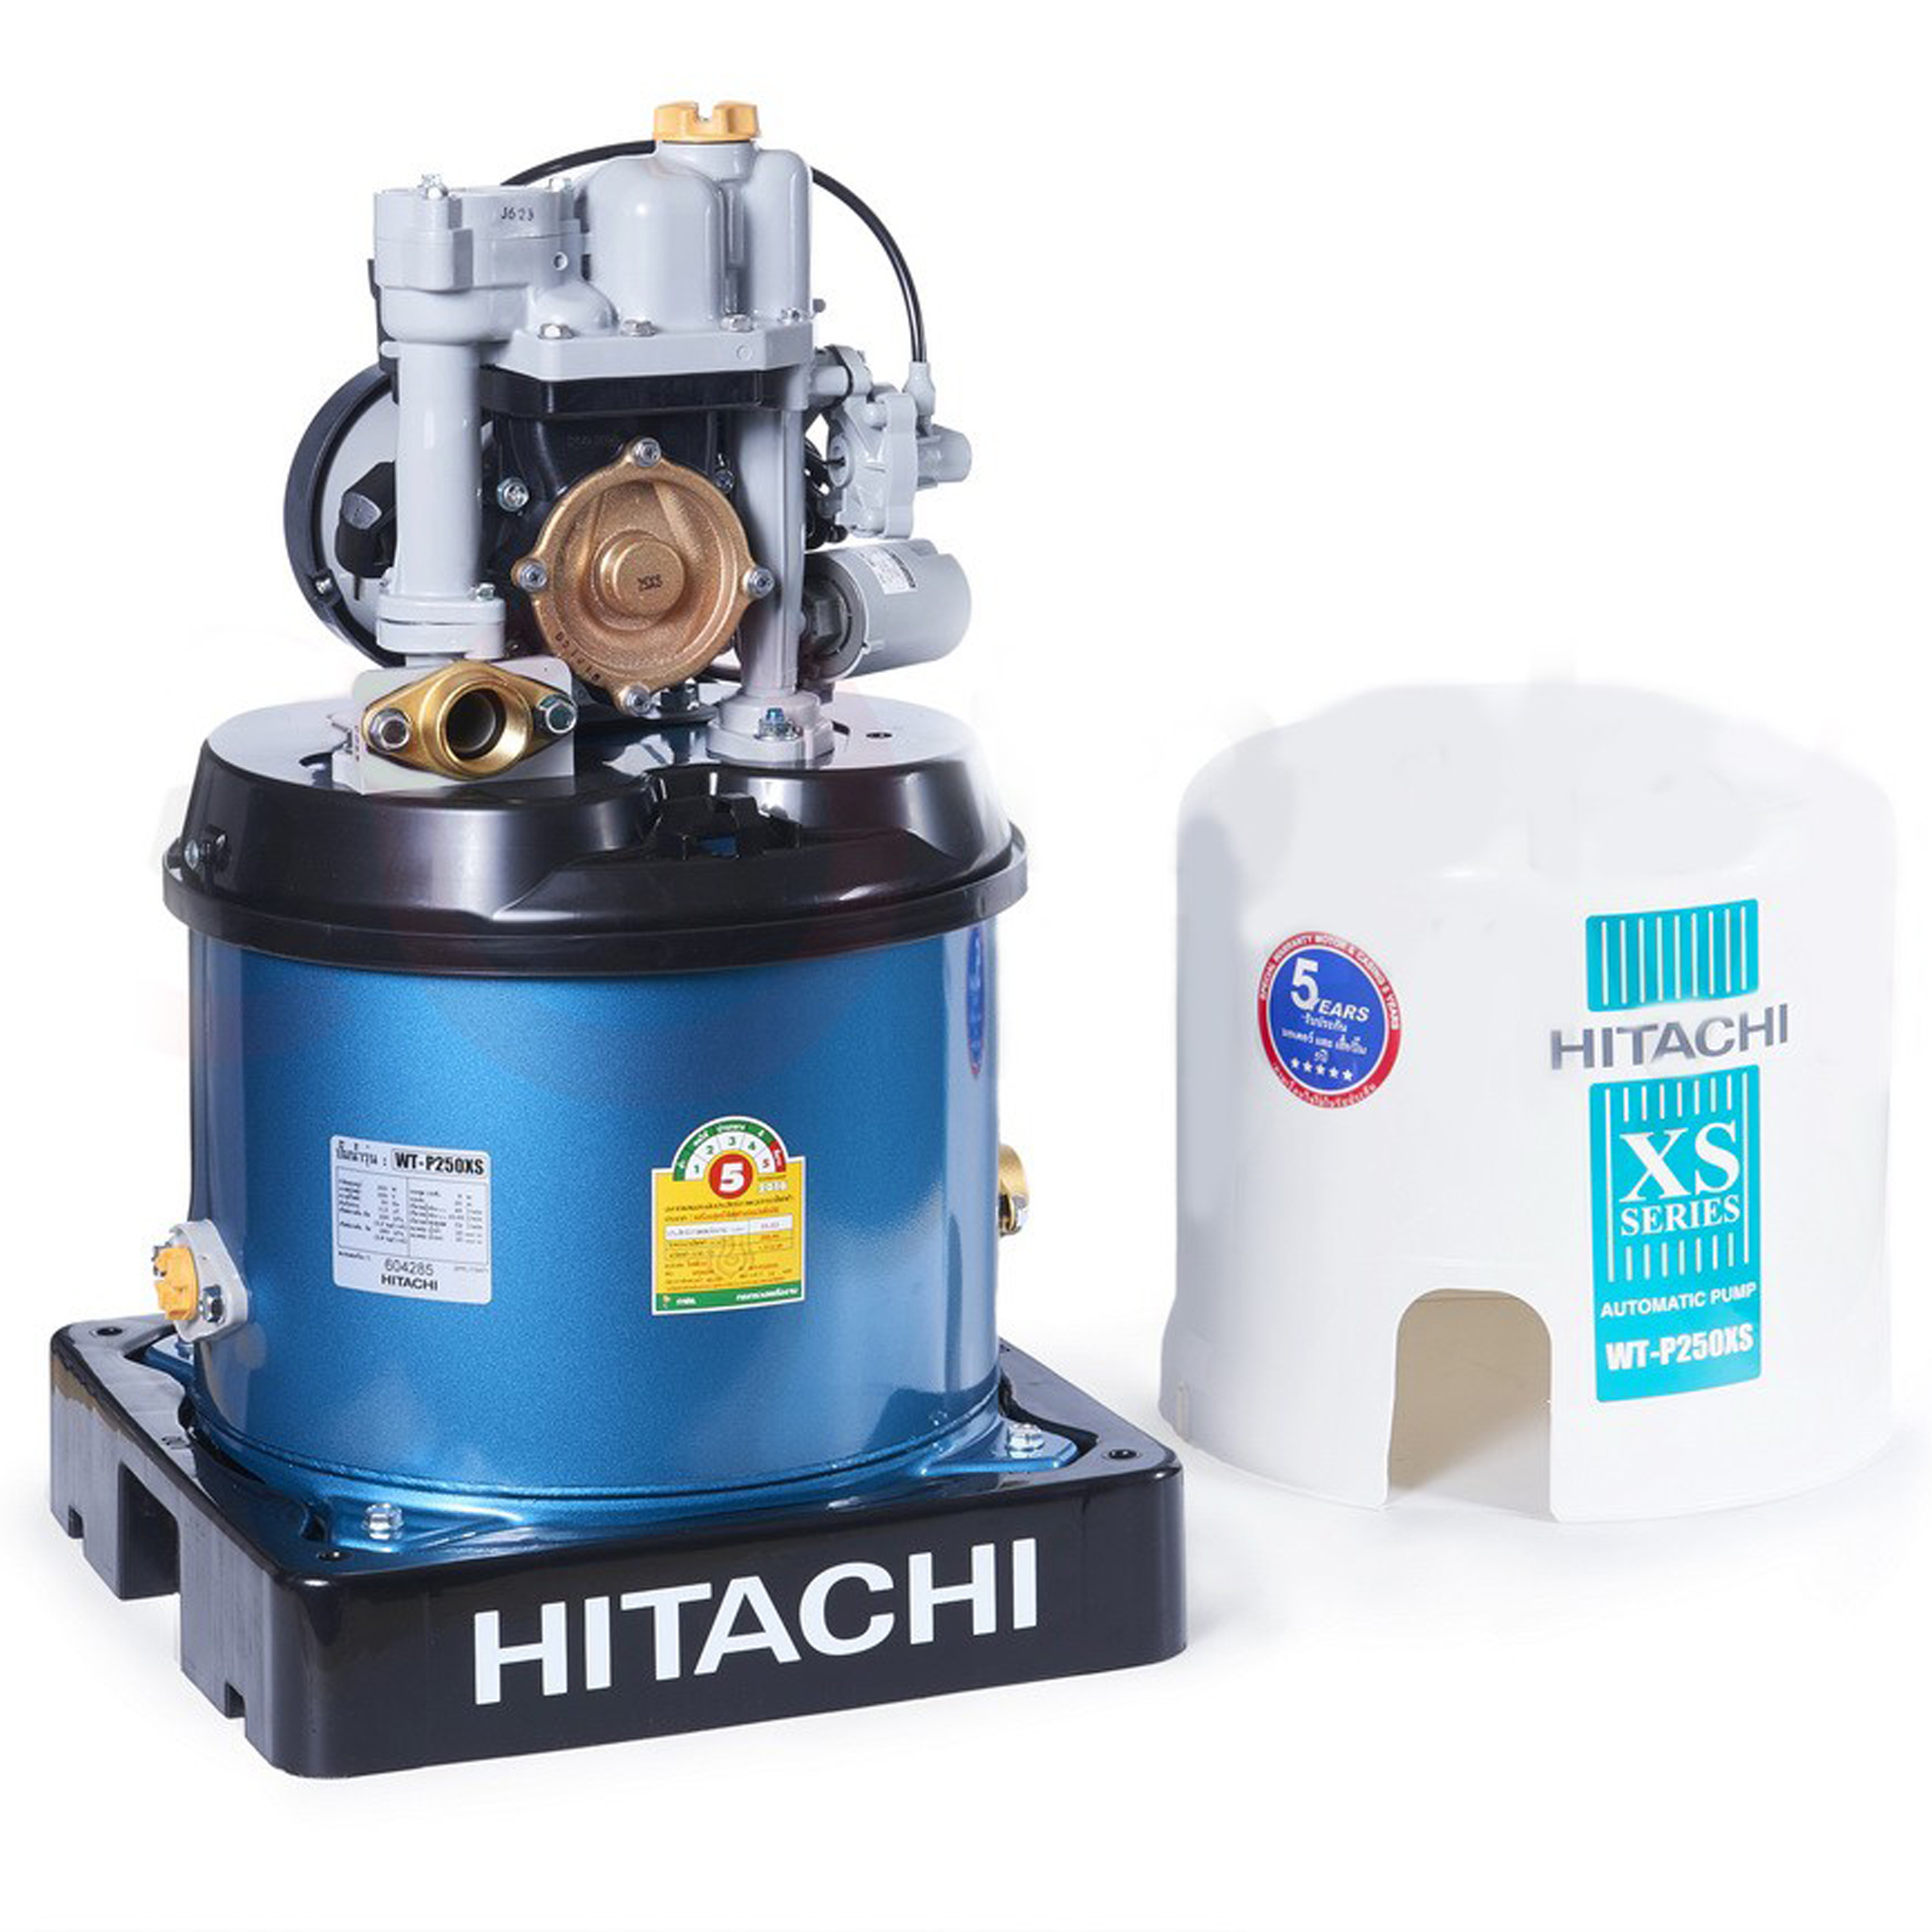 HITACHI Automatic Pump 250W, 46L/min, WT-P250XS - Click Image to Close